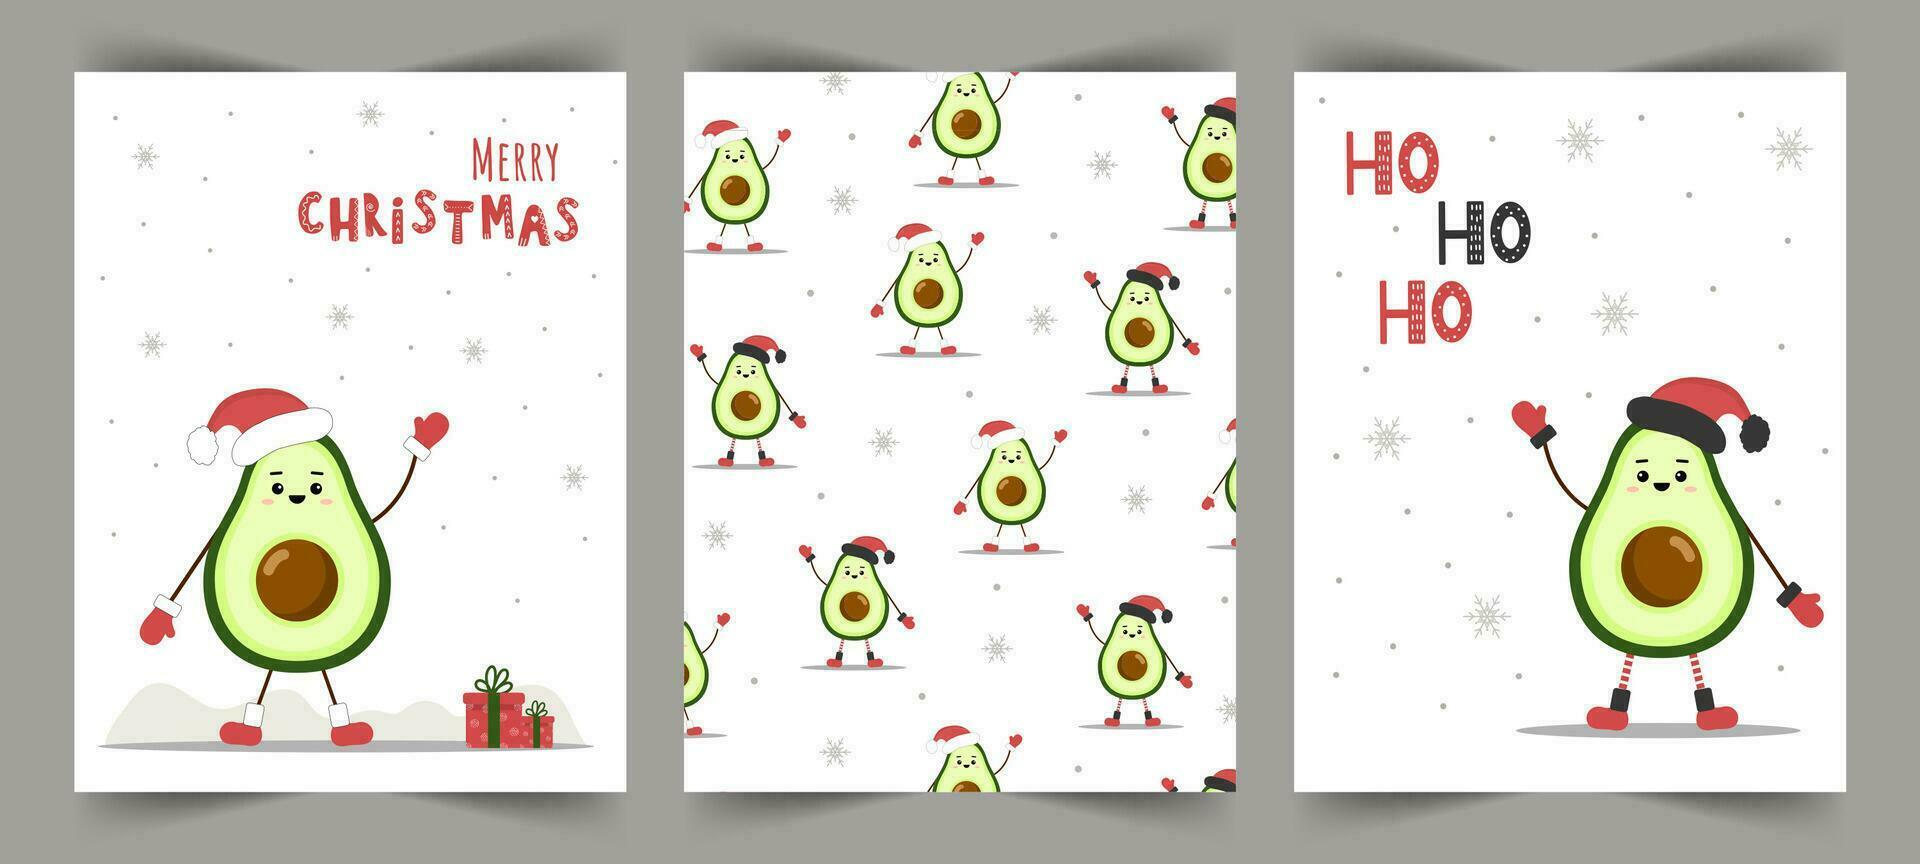 Cute christmas cards with avocado in santa hat. Season greetings. vector